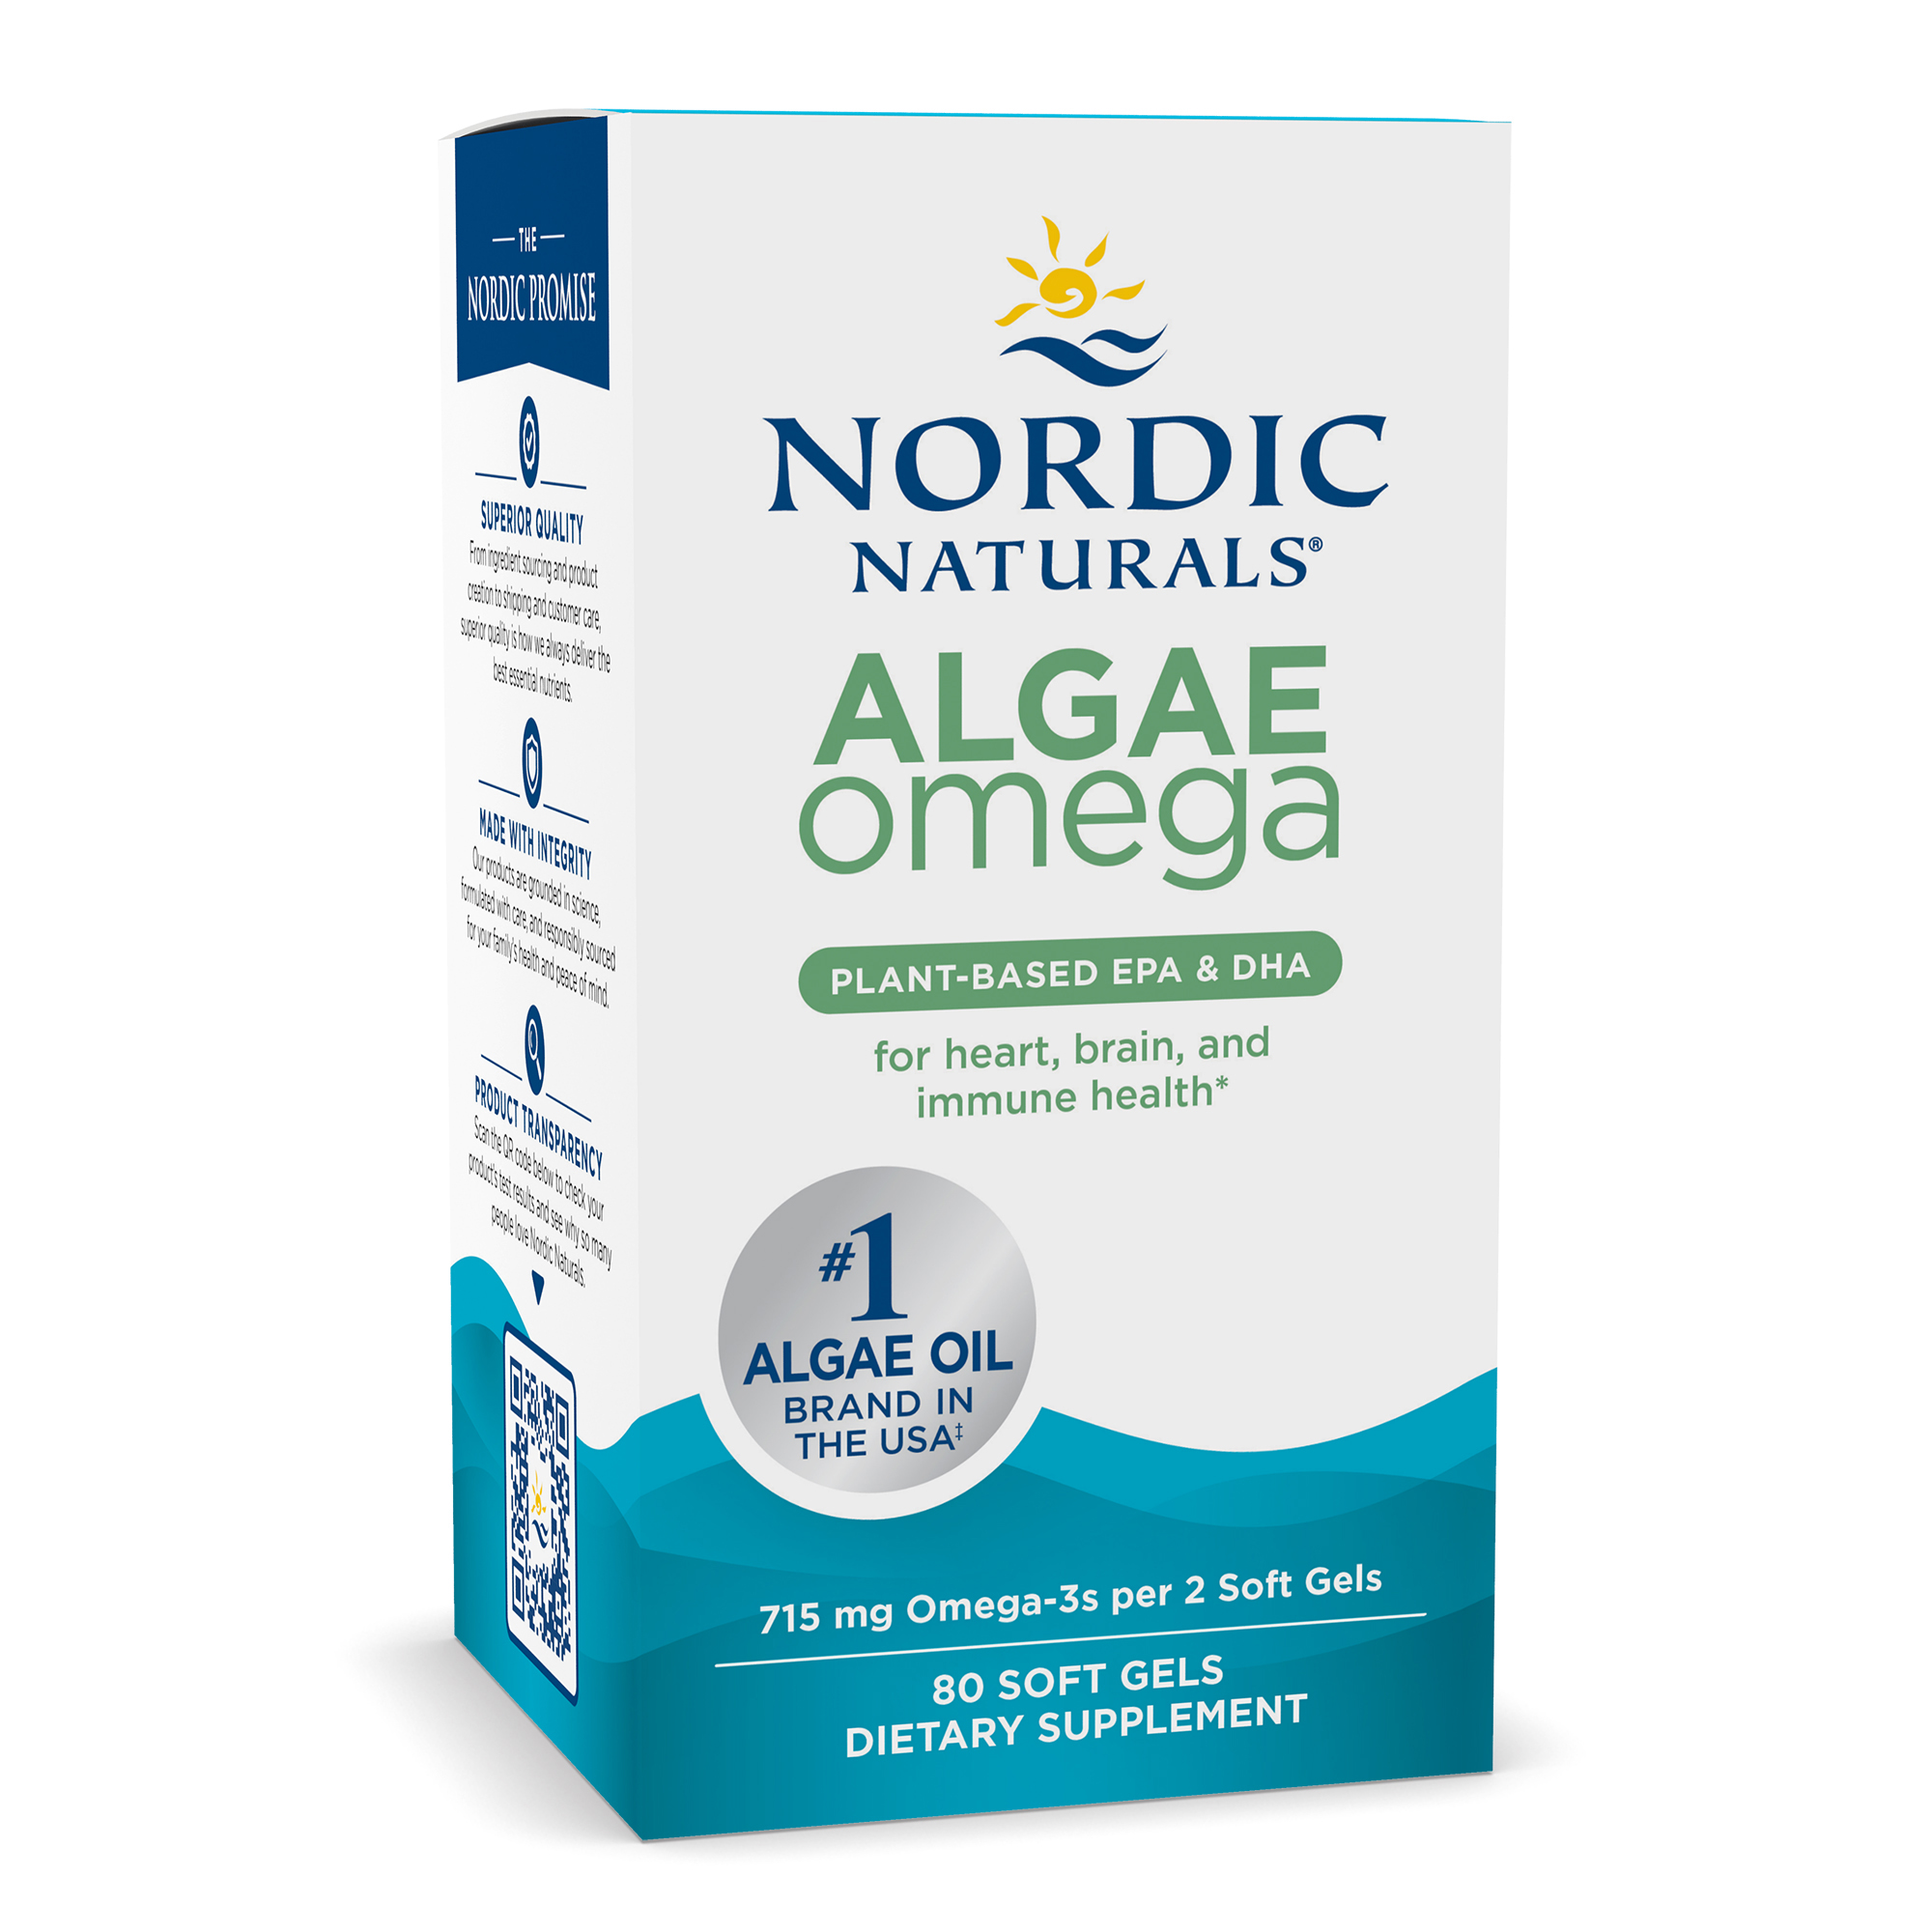 Nordic Naturals Algae Omega Sams Club